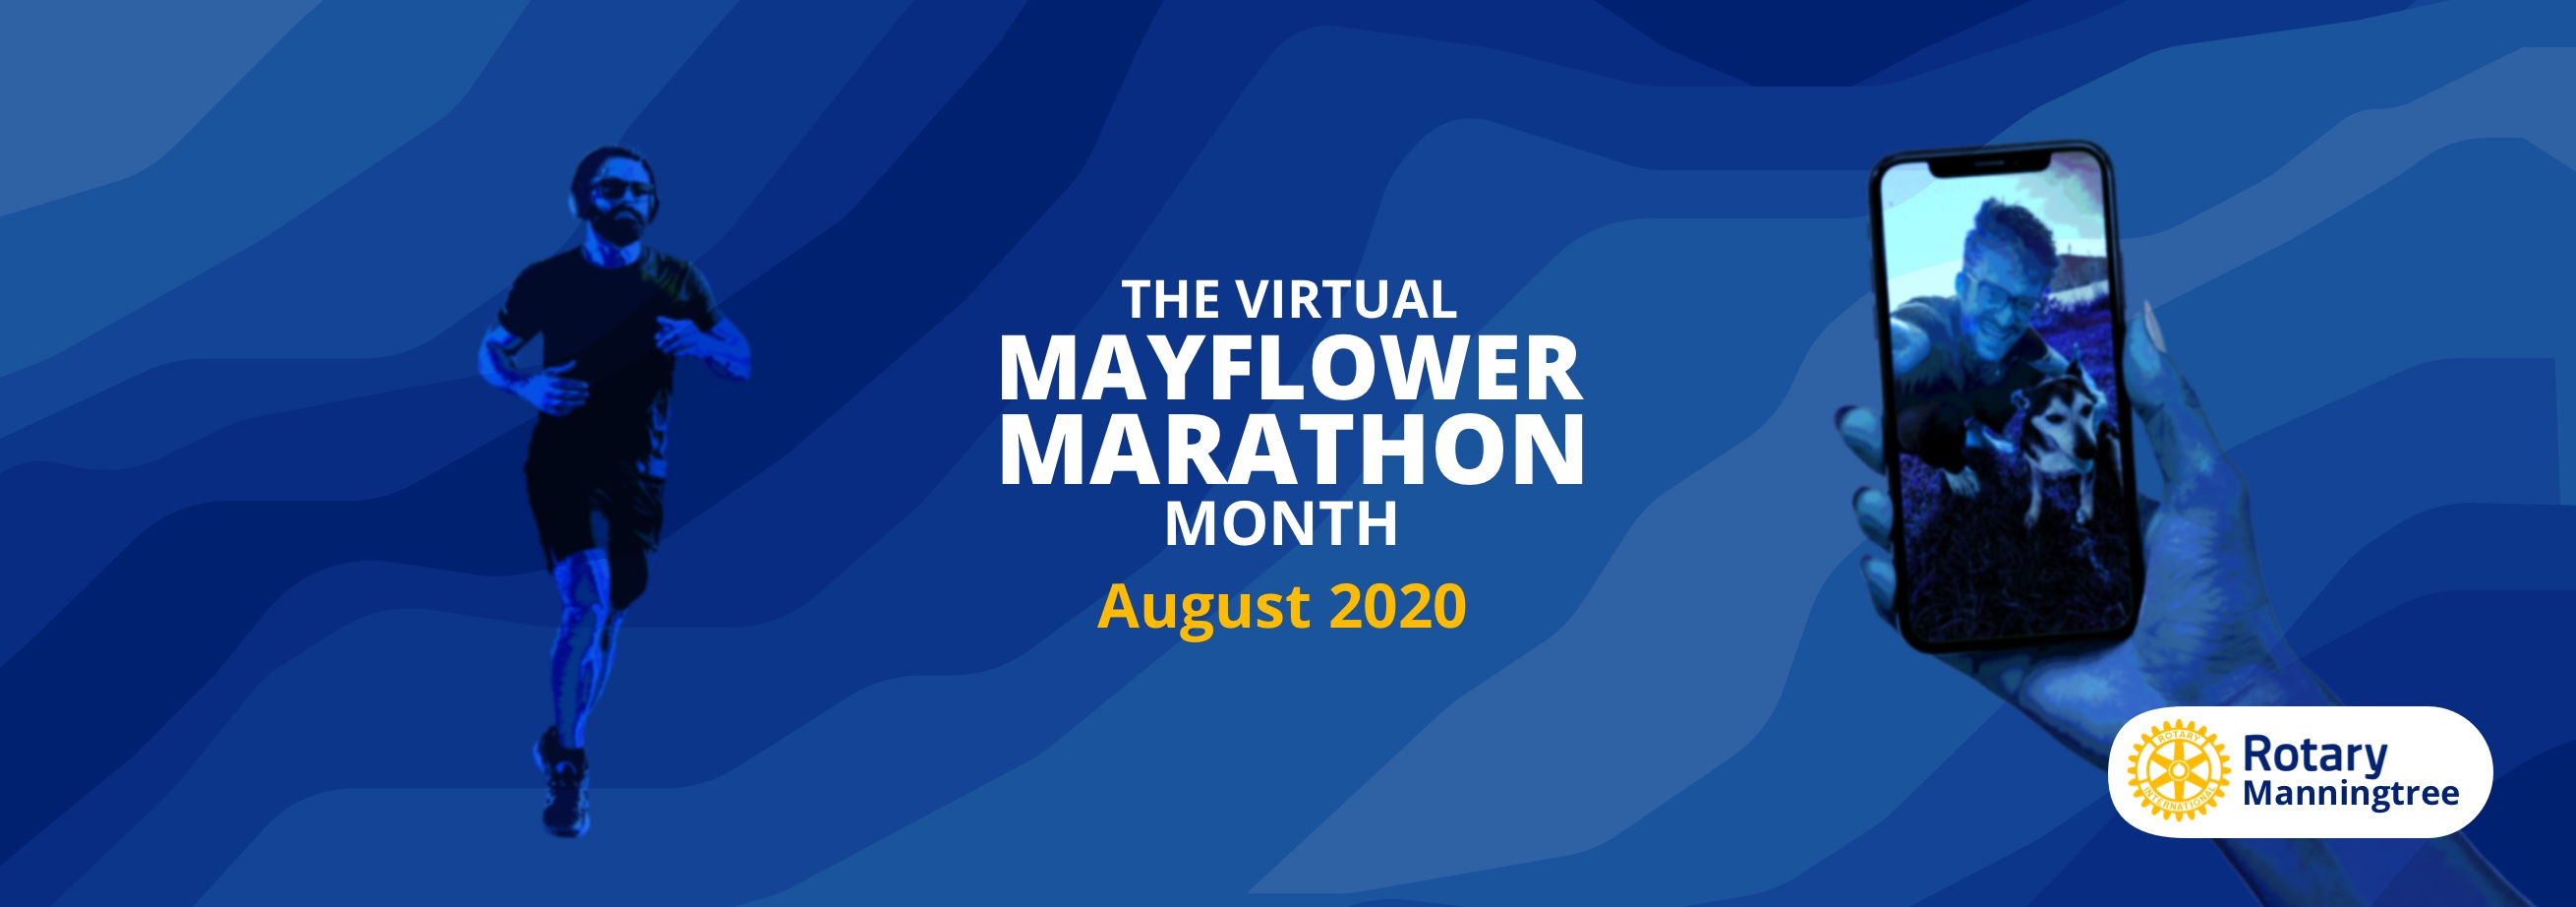 The Virtual Mayflower Marathon Month